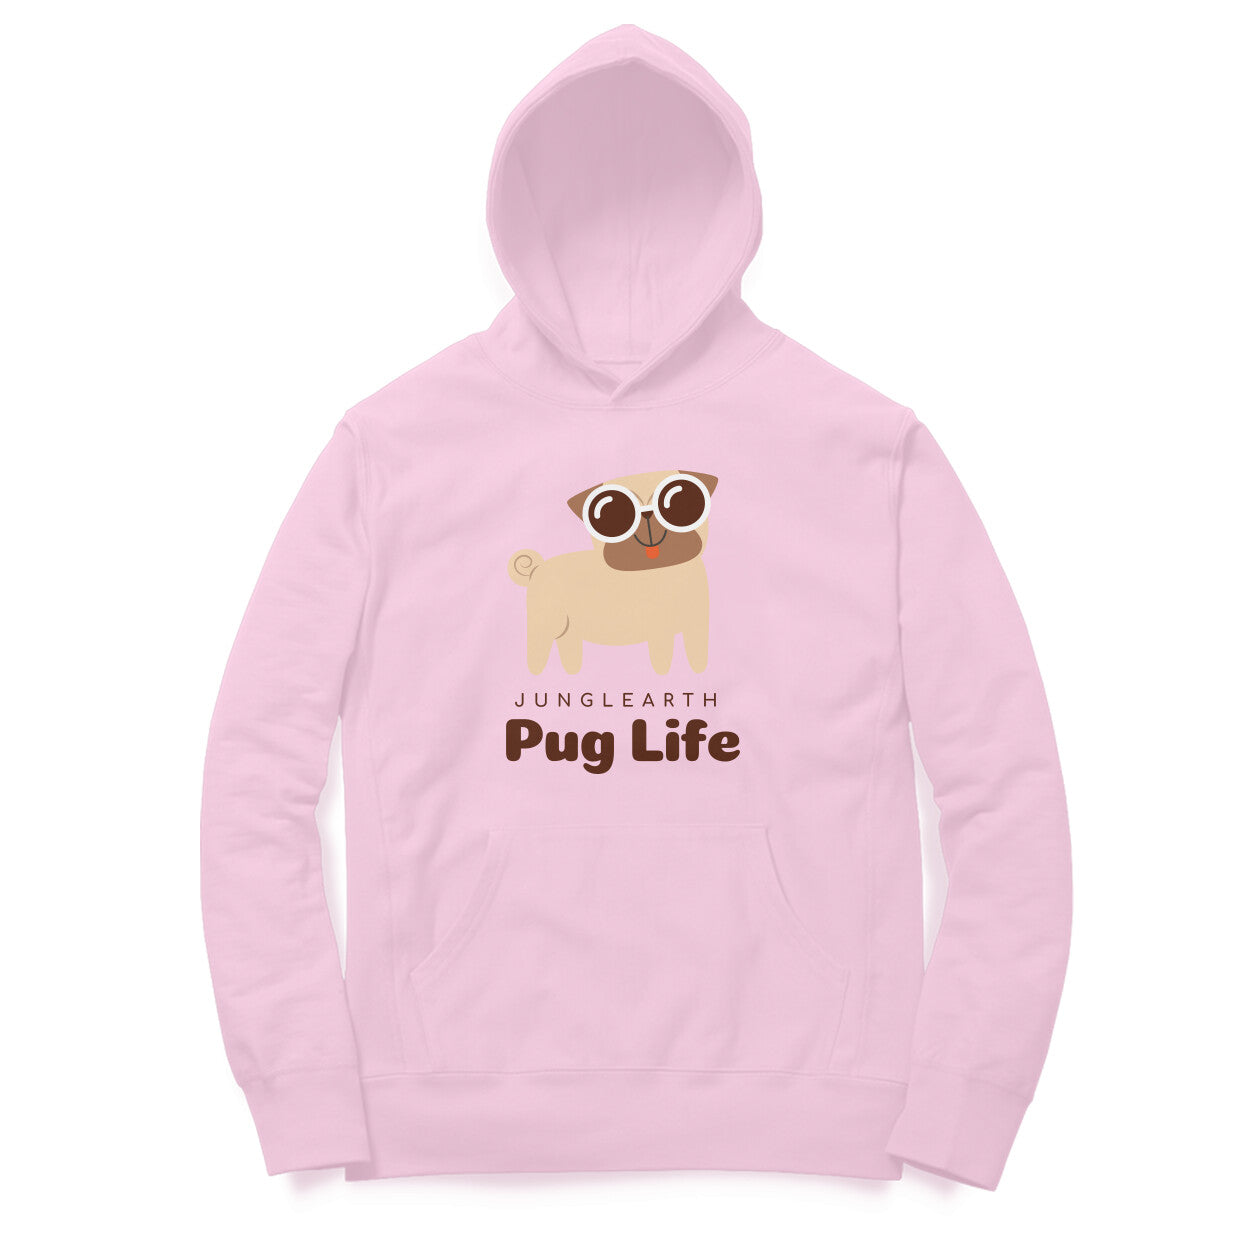 Junglearth Pug life